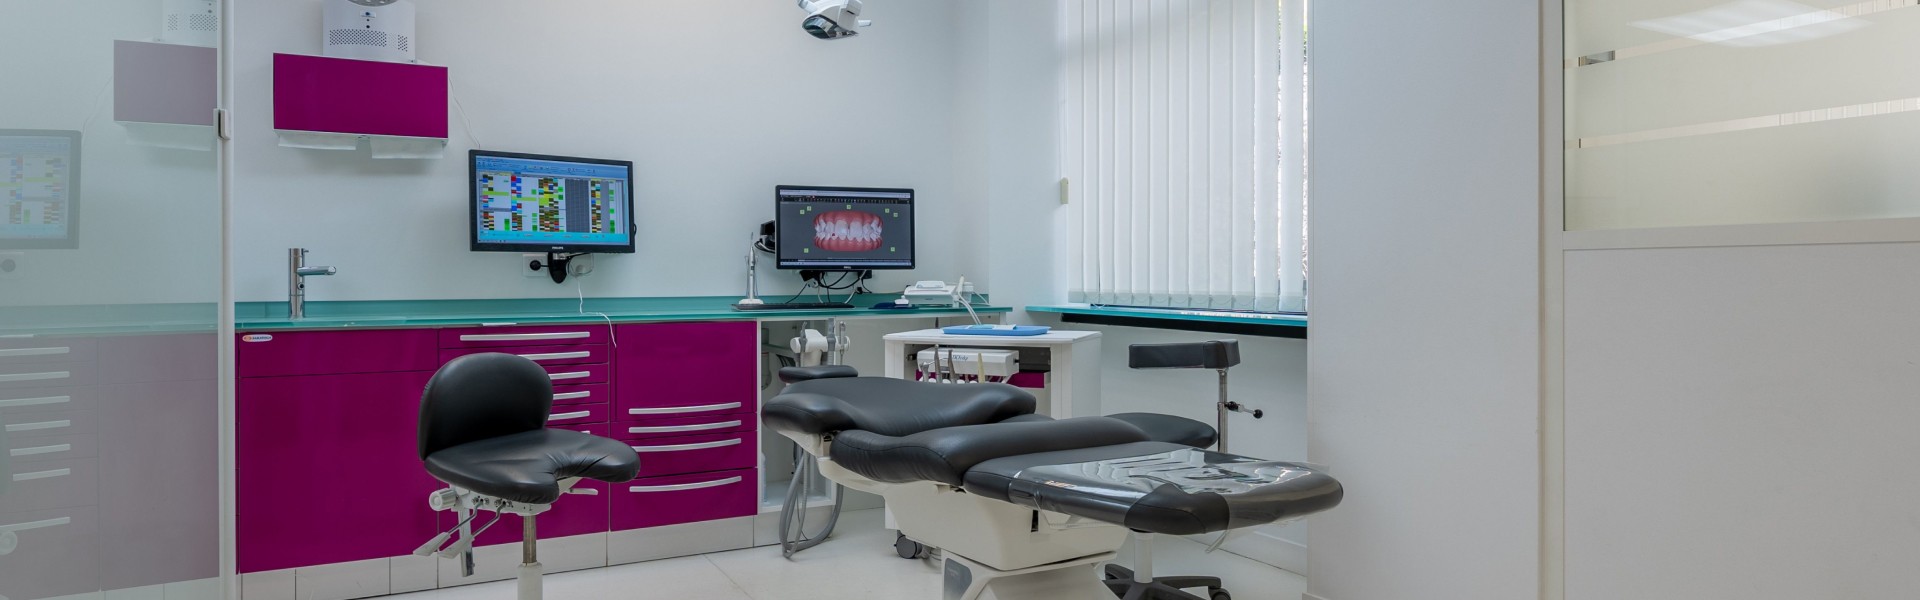 Cabinet Dr Leloup urgences orthodontiques